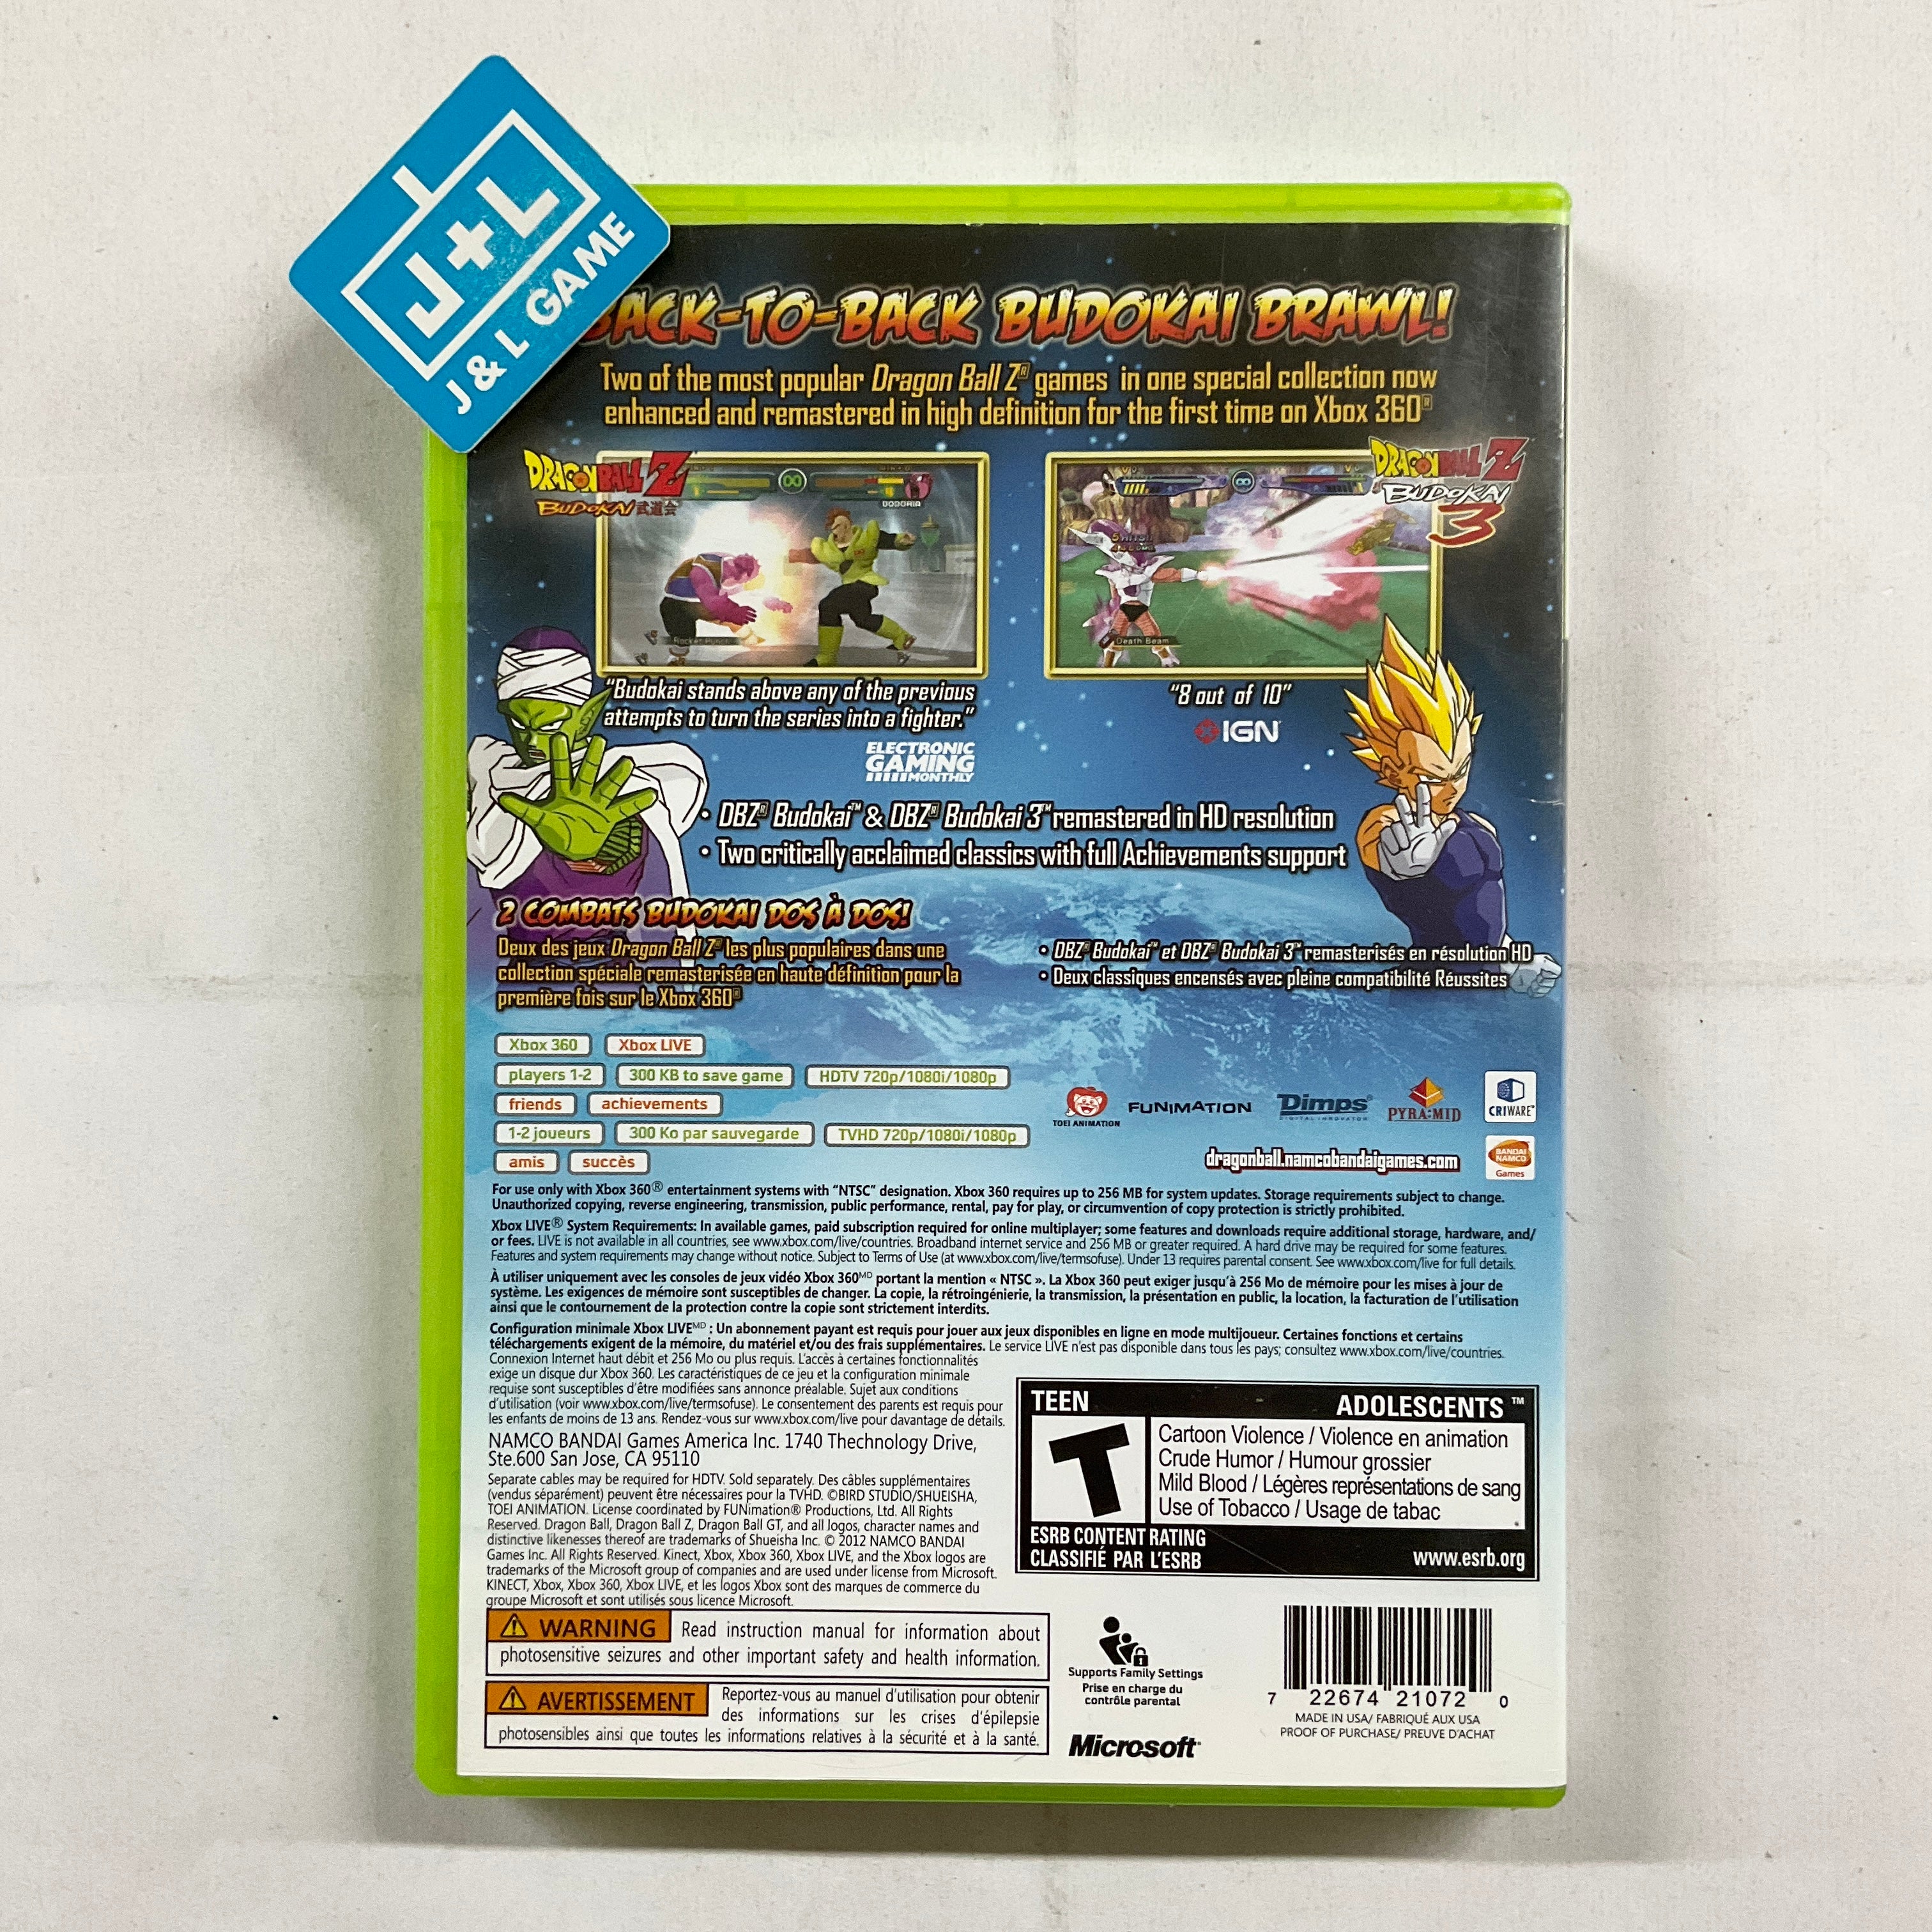 Dragon Ball Z Budokai HD Collection - (360) Xbox 360 [Pre-Owned] Video Games Namco Bandai Games   